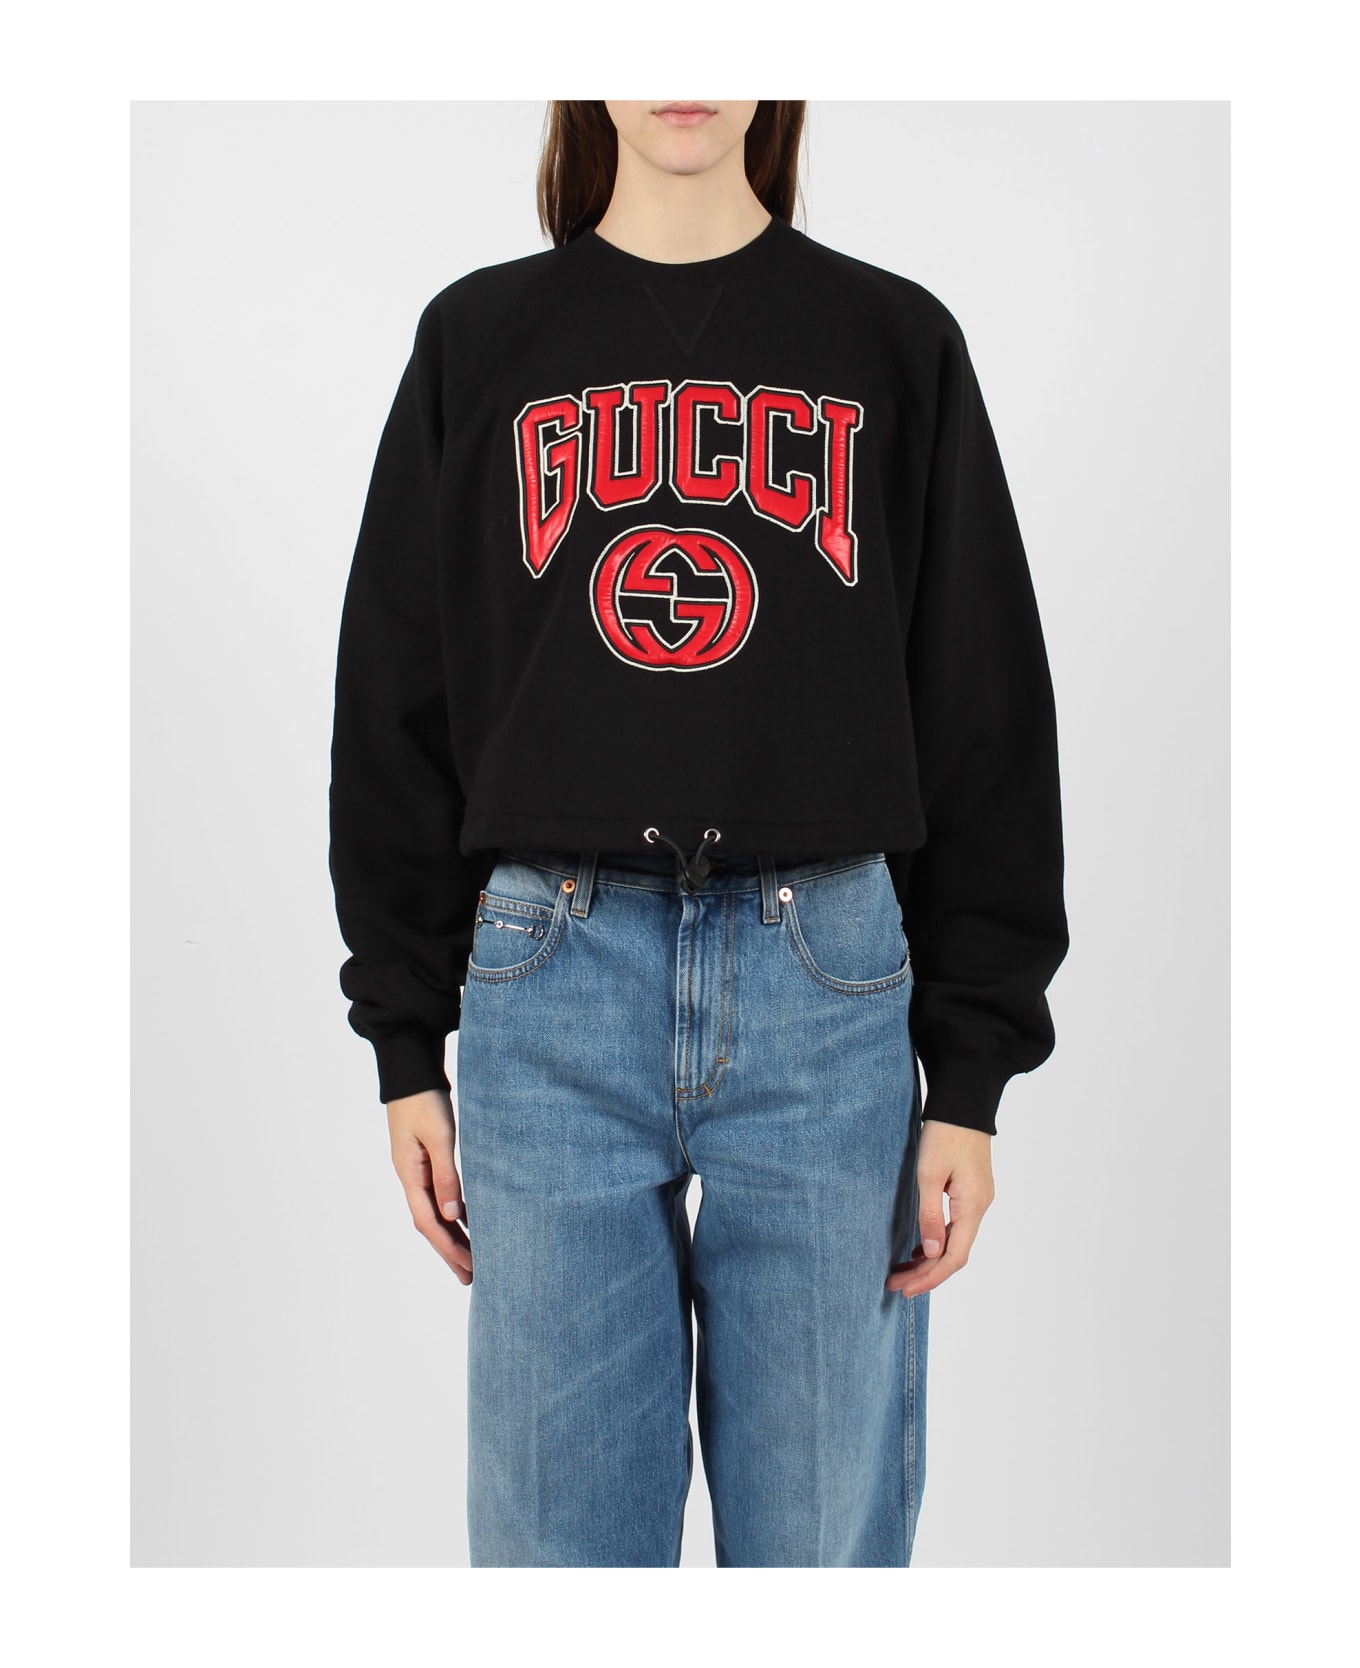 Gucci pineapple Embroidery Jersey Sweatshirt - Black